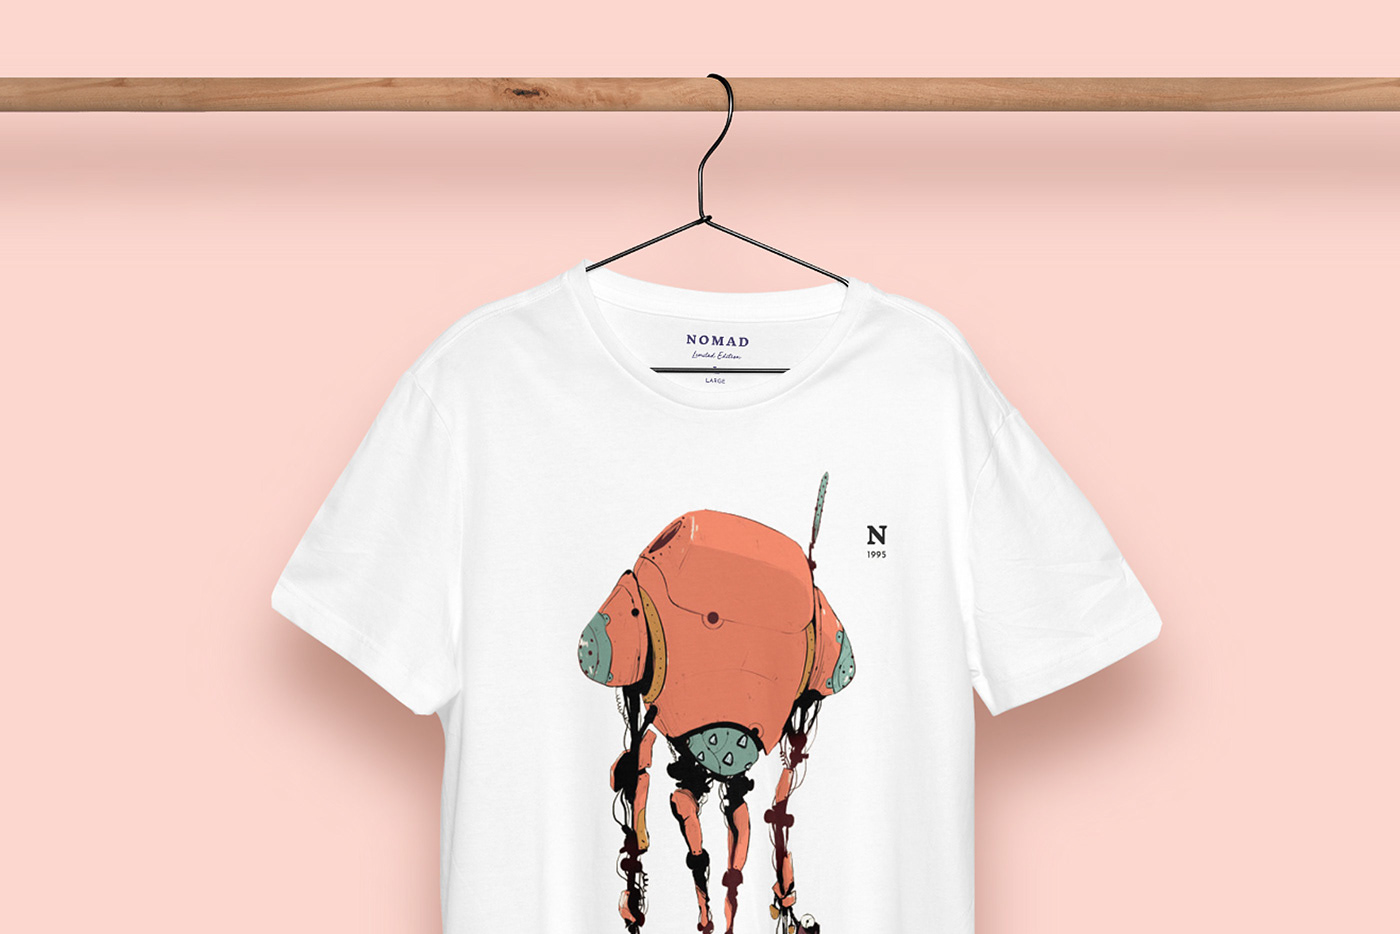 apparel tshirt t-shirt T Shirt tag Label studio artboard studio Mockup mockups